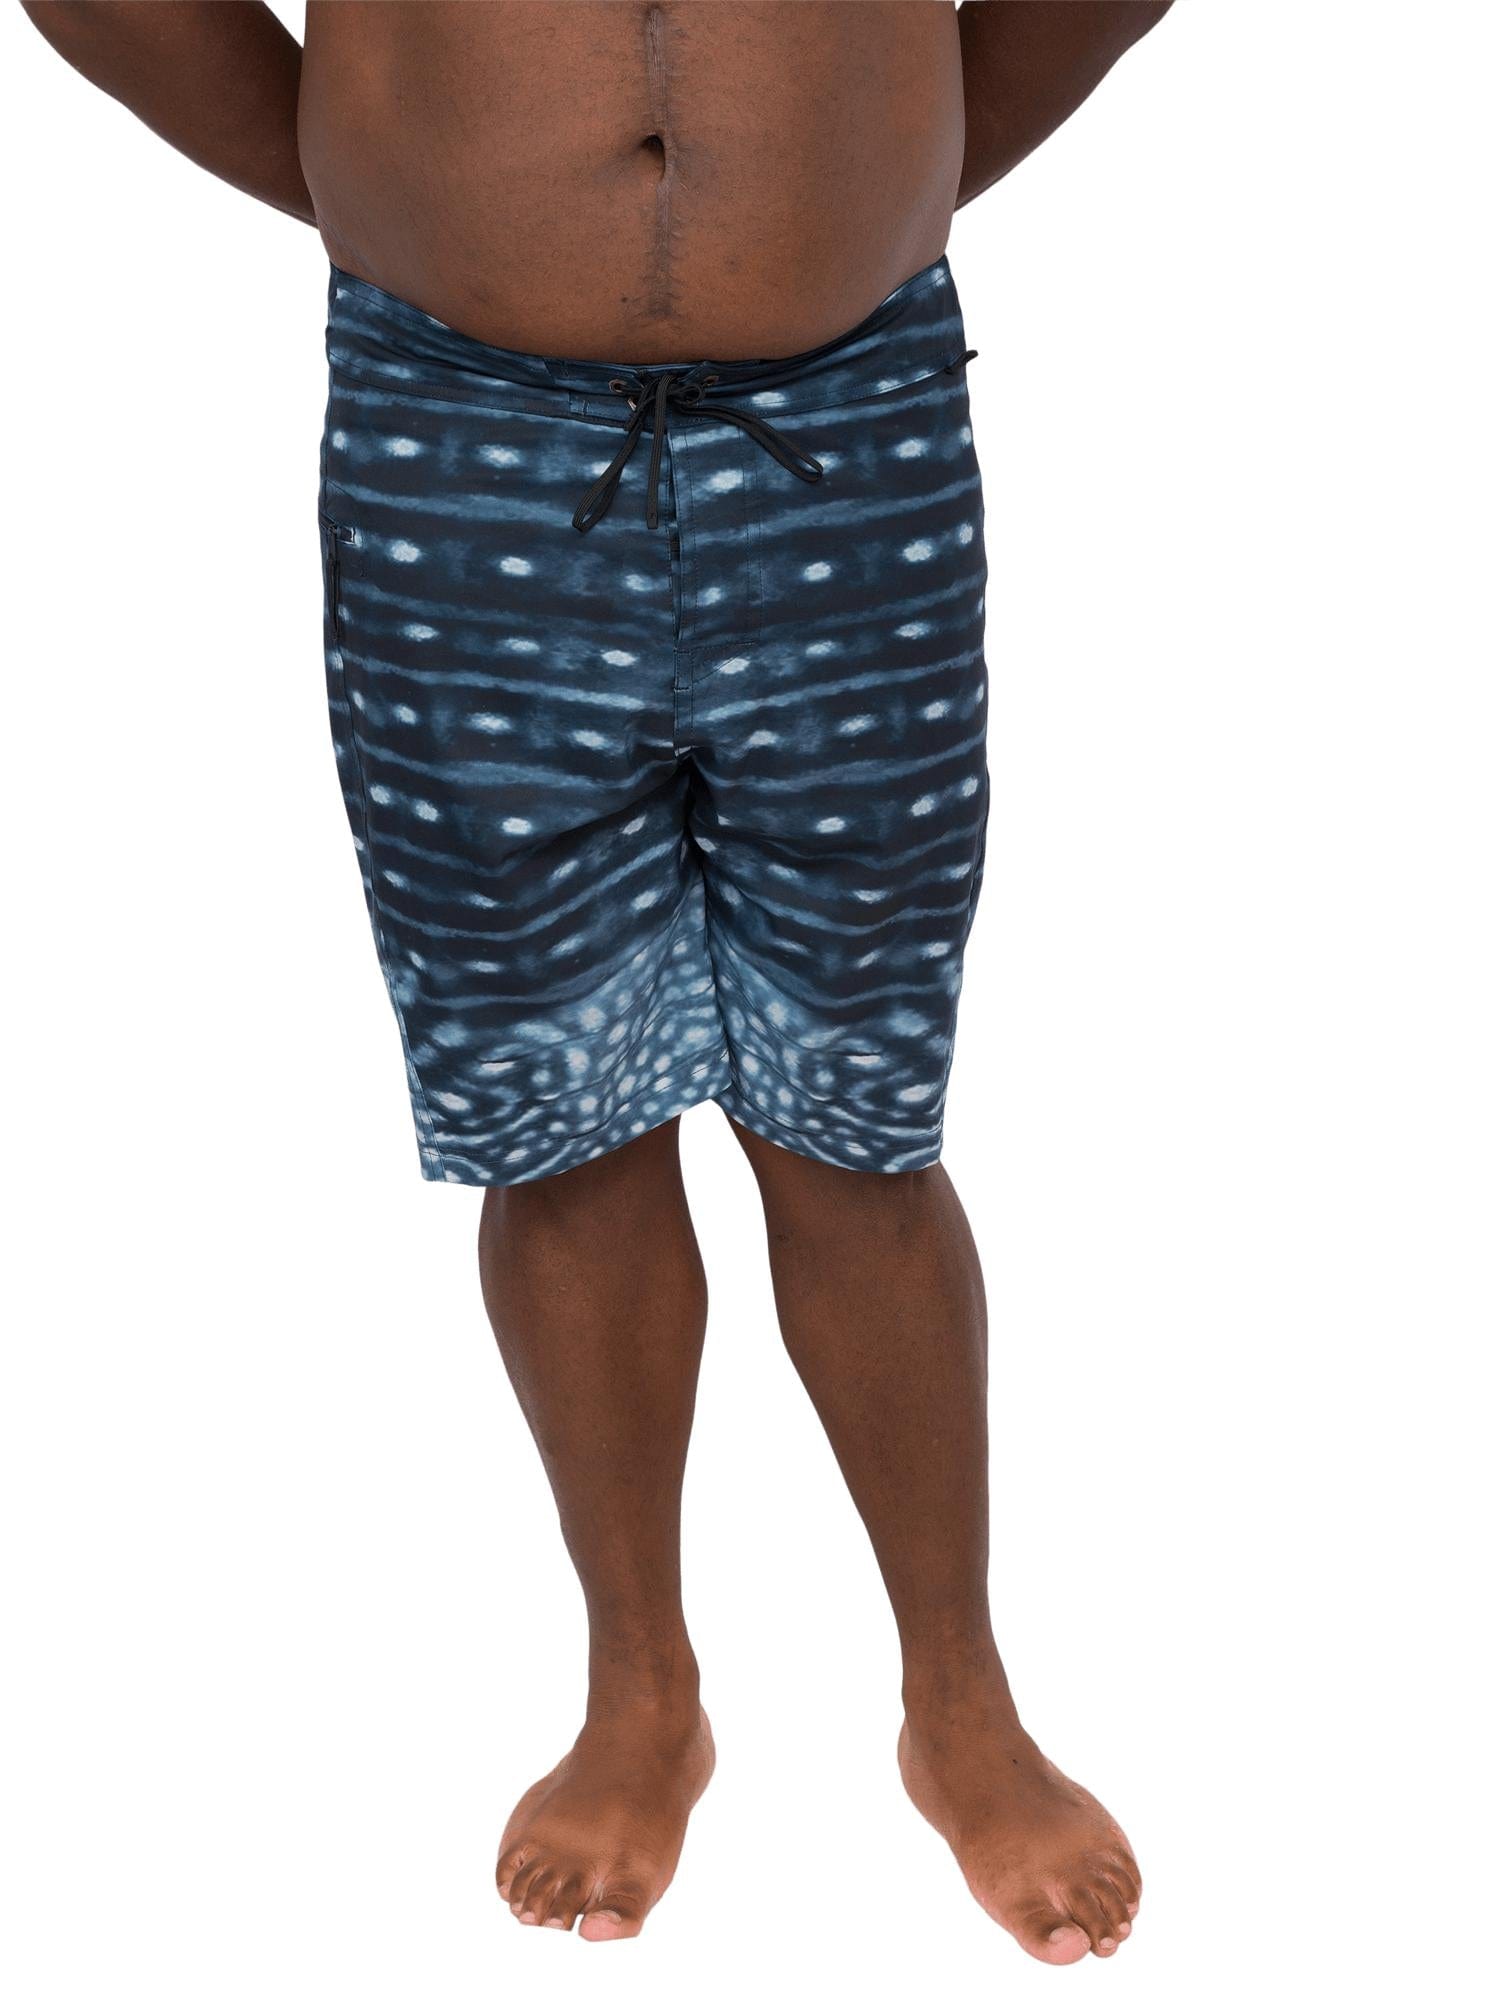 Men's Boardshorts, Beach Shorts For Men